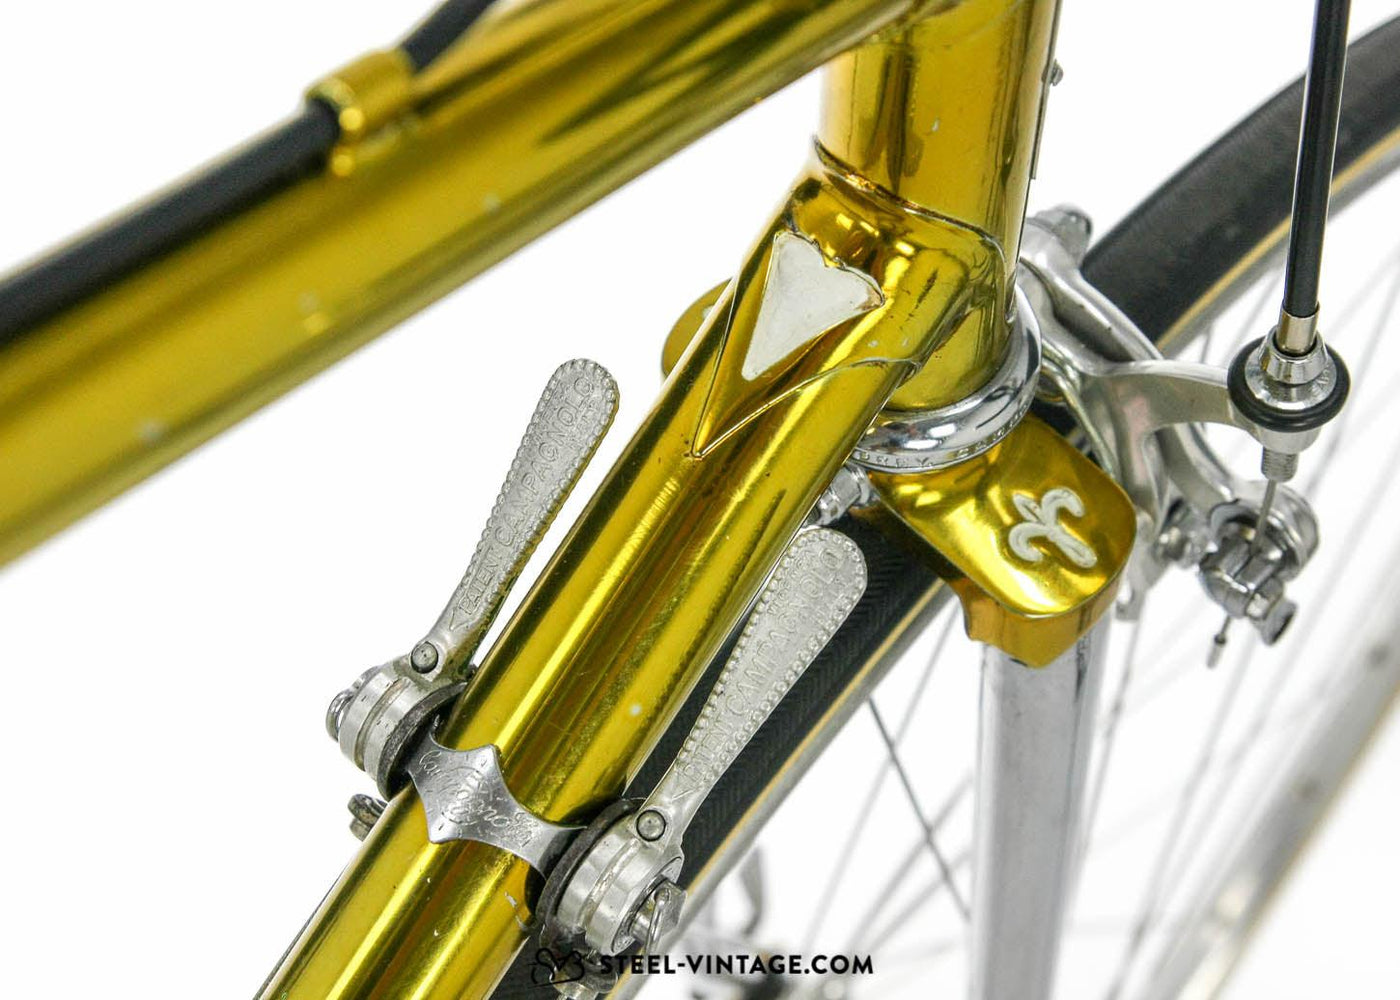 Wilier Triestina Cromovelato Vintage Road Bike 1975 - Steel Vintage Bikes